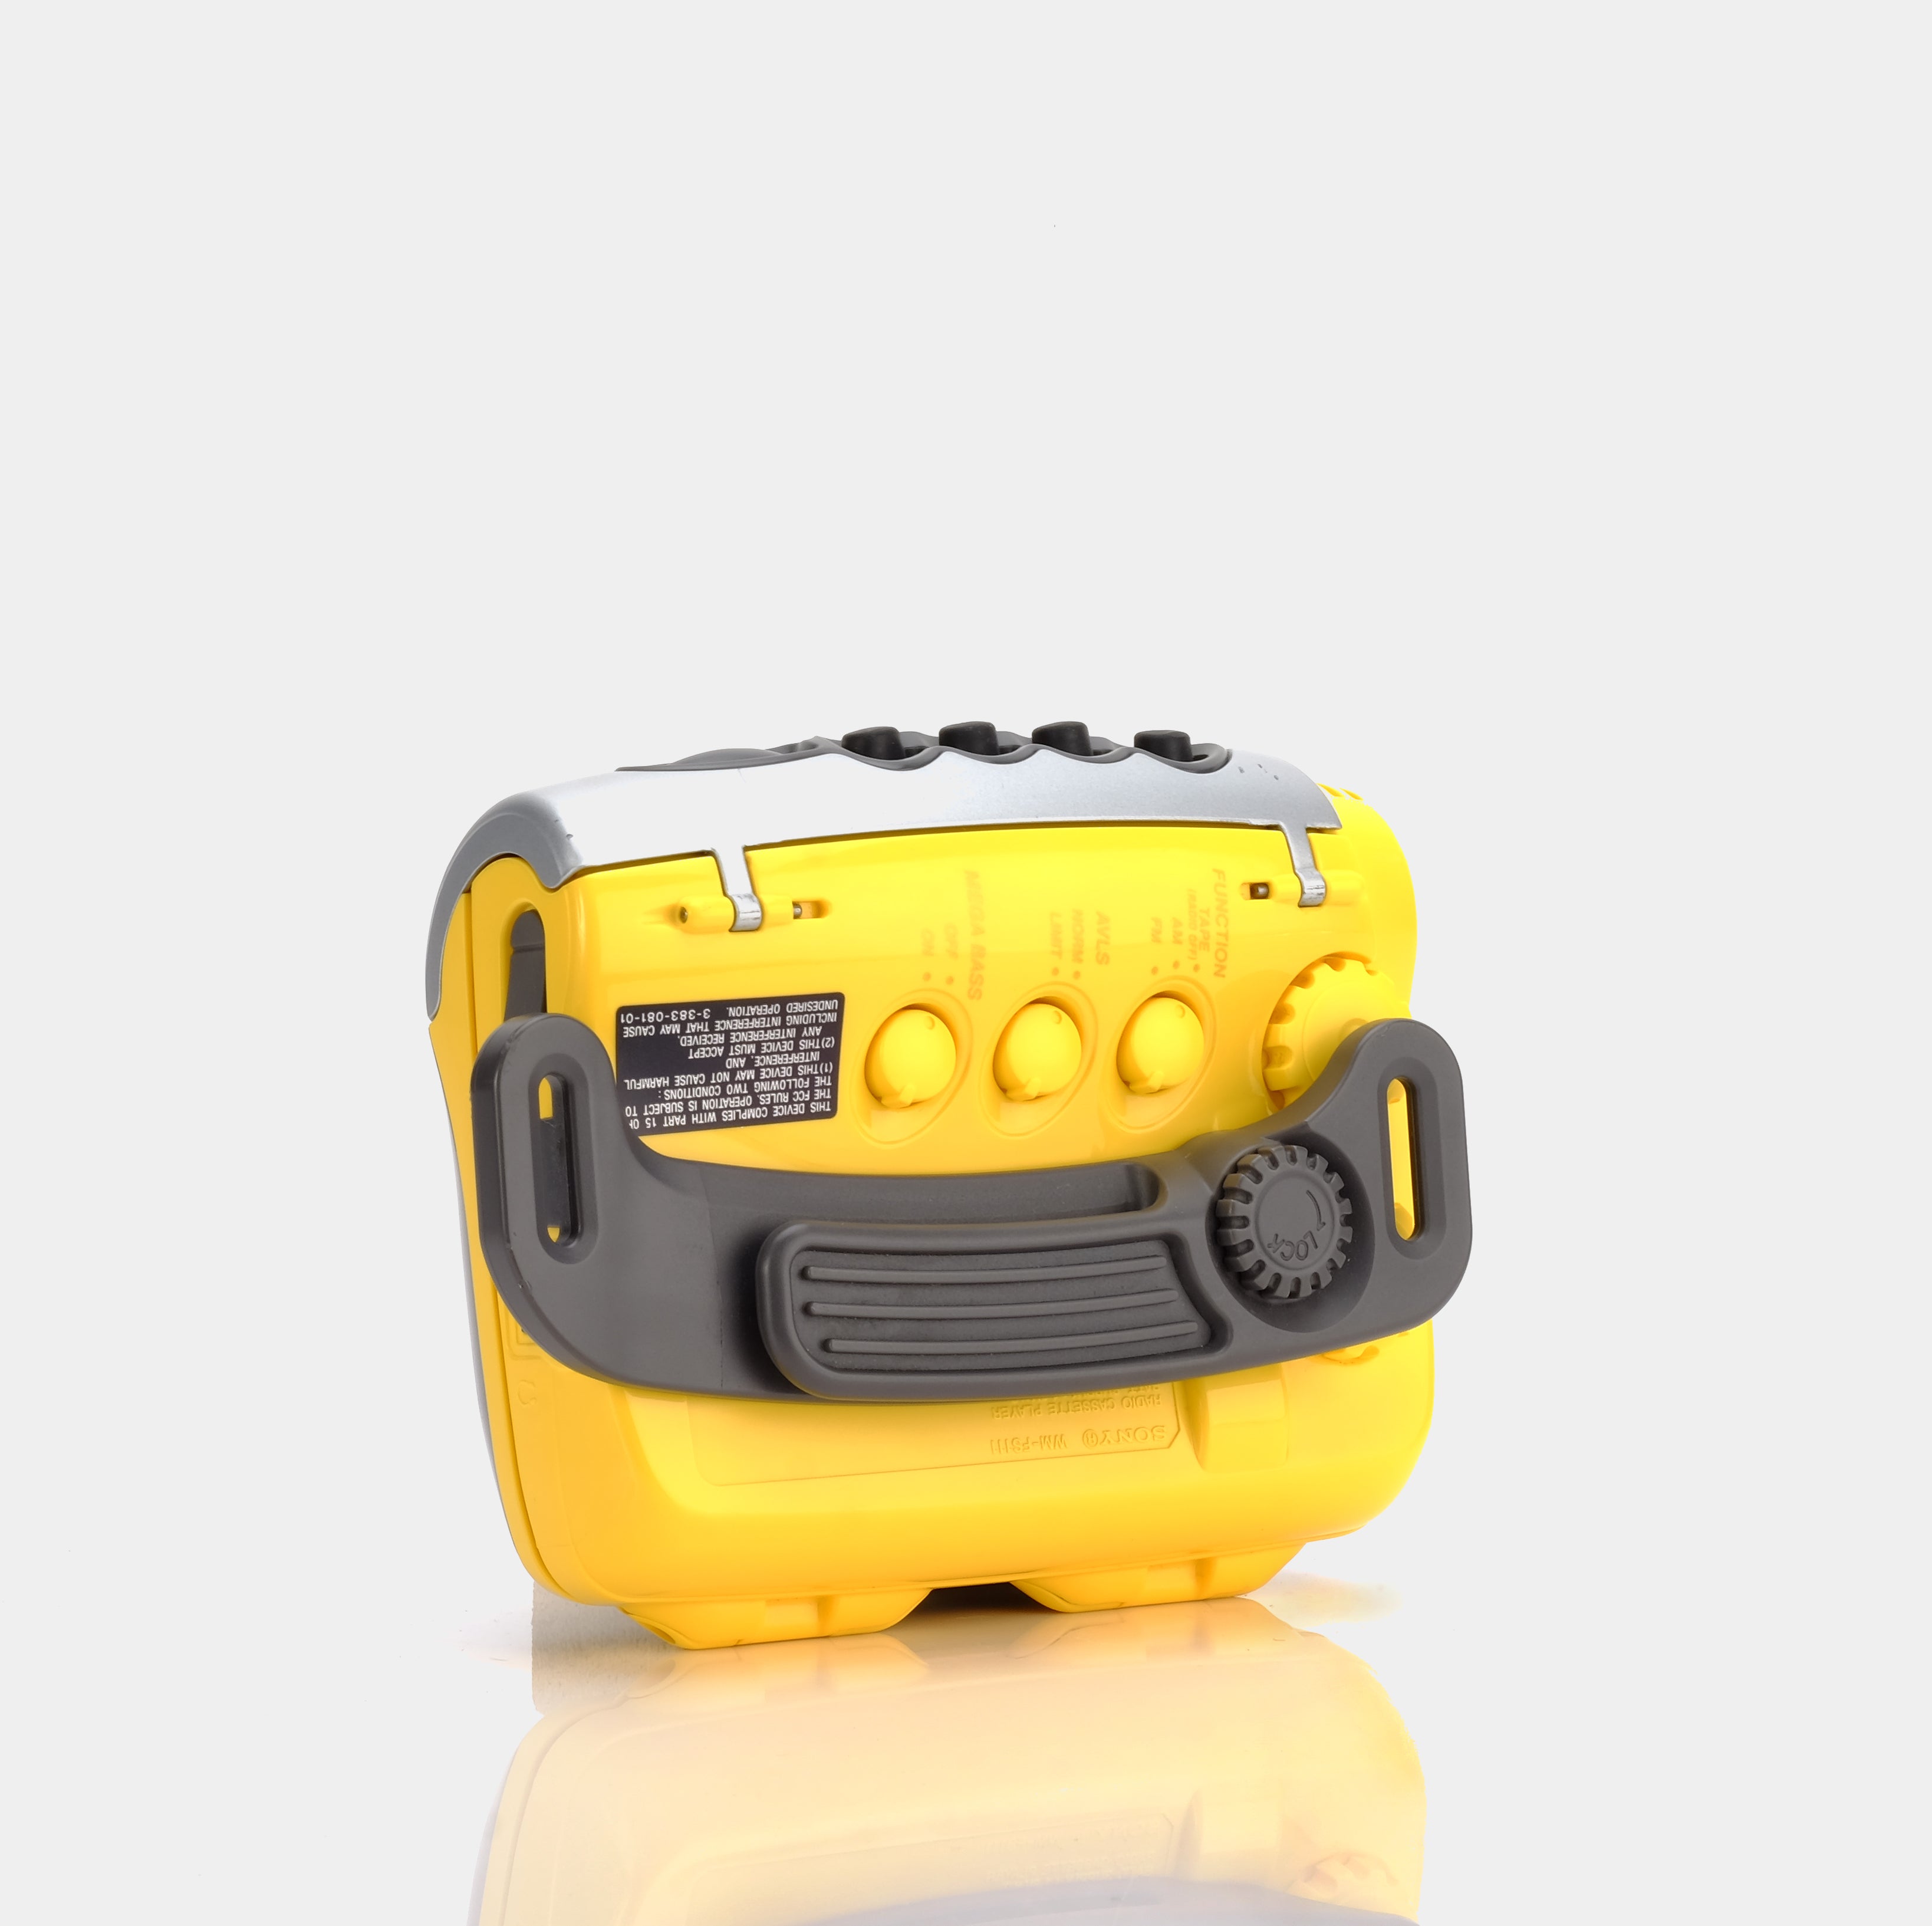 Sony Sports Walkman WM-FS111 Yellow AM/FM Portable Cassette Player